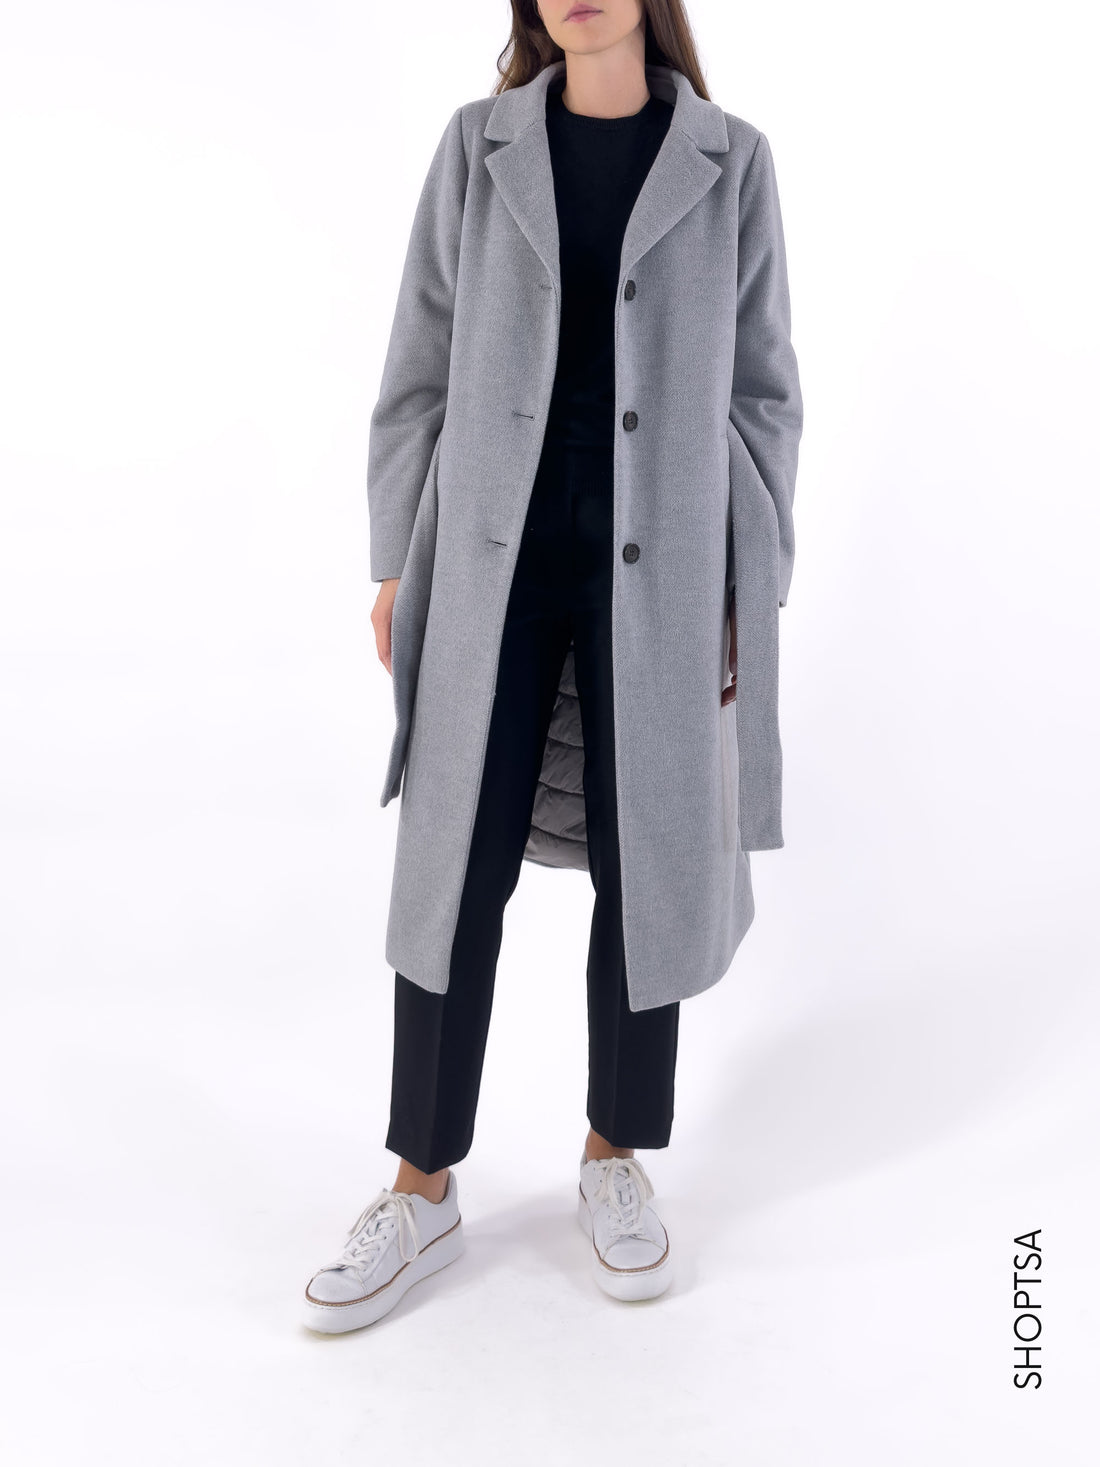 Gray coat with BORBONA insert - EMME Marella